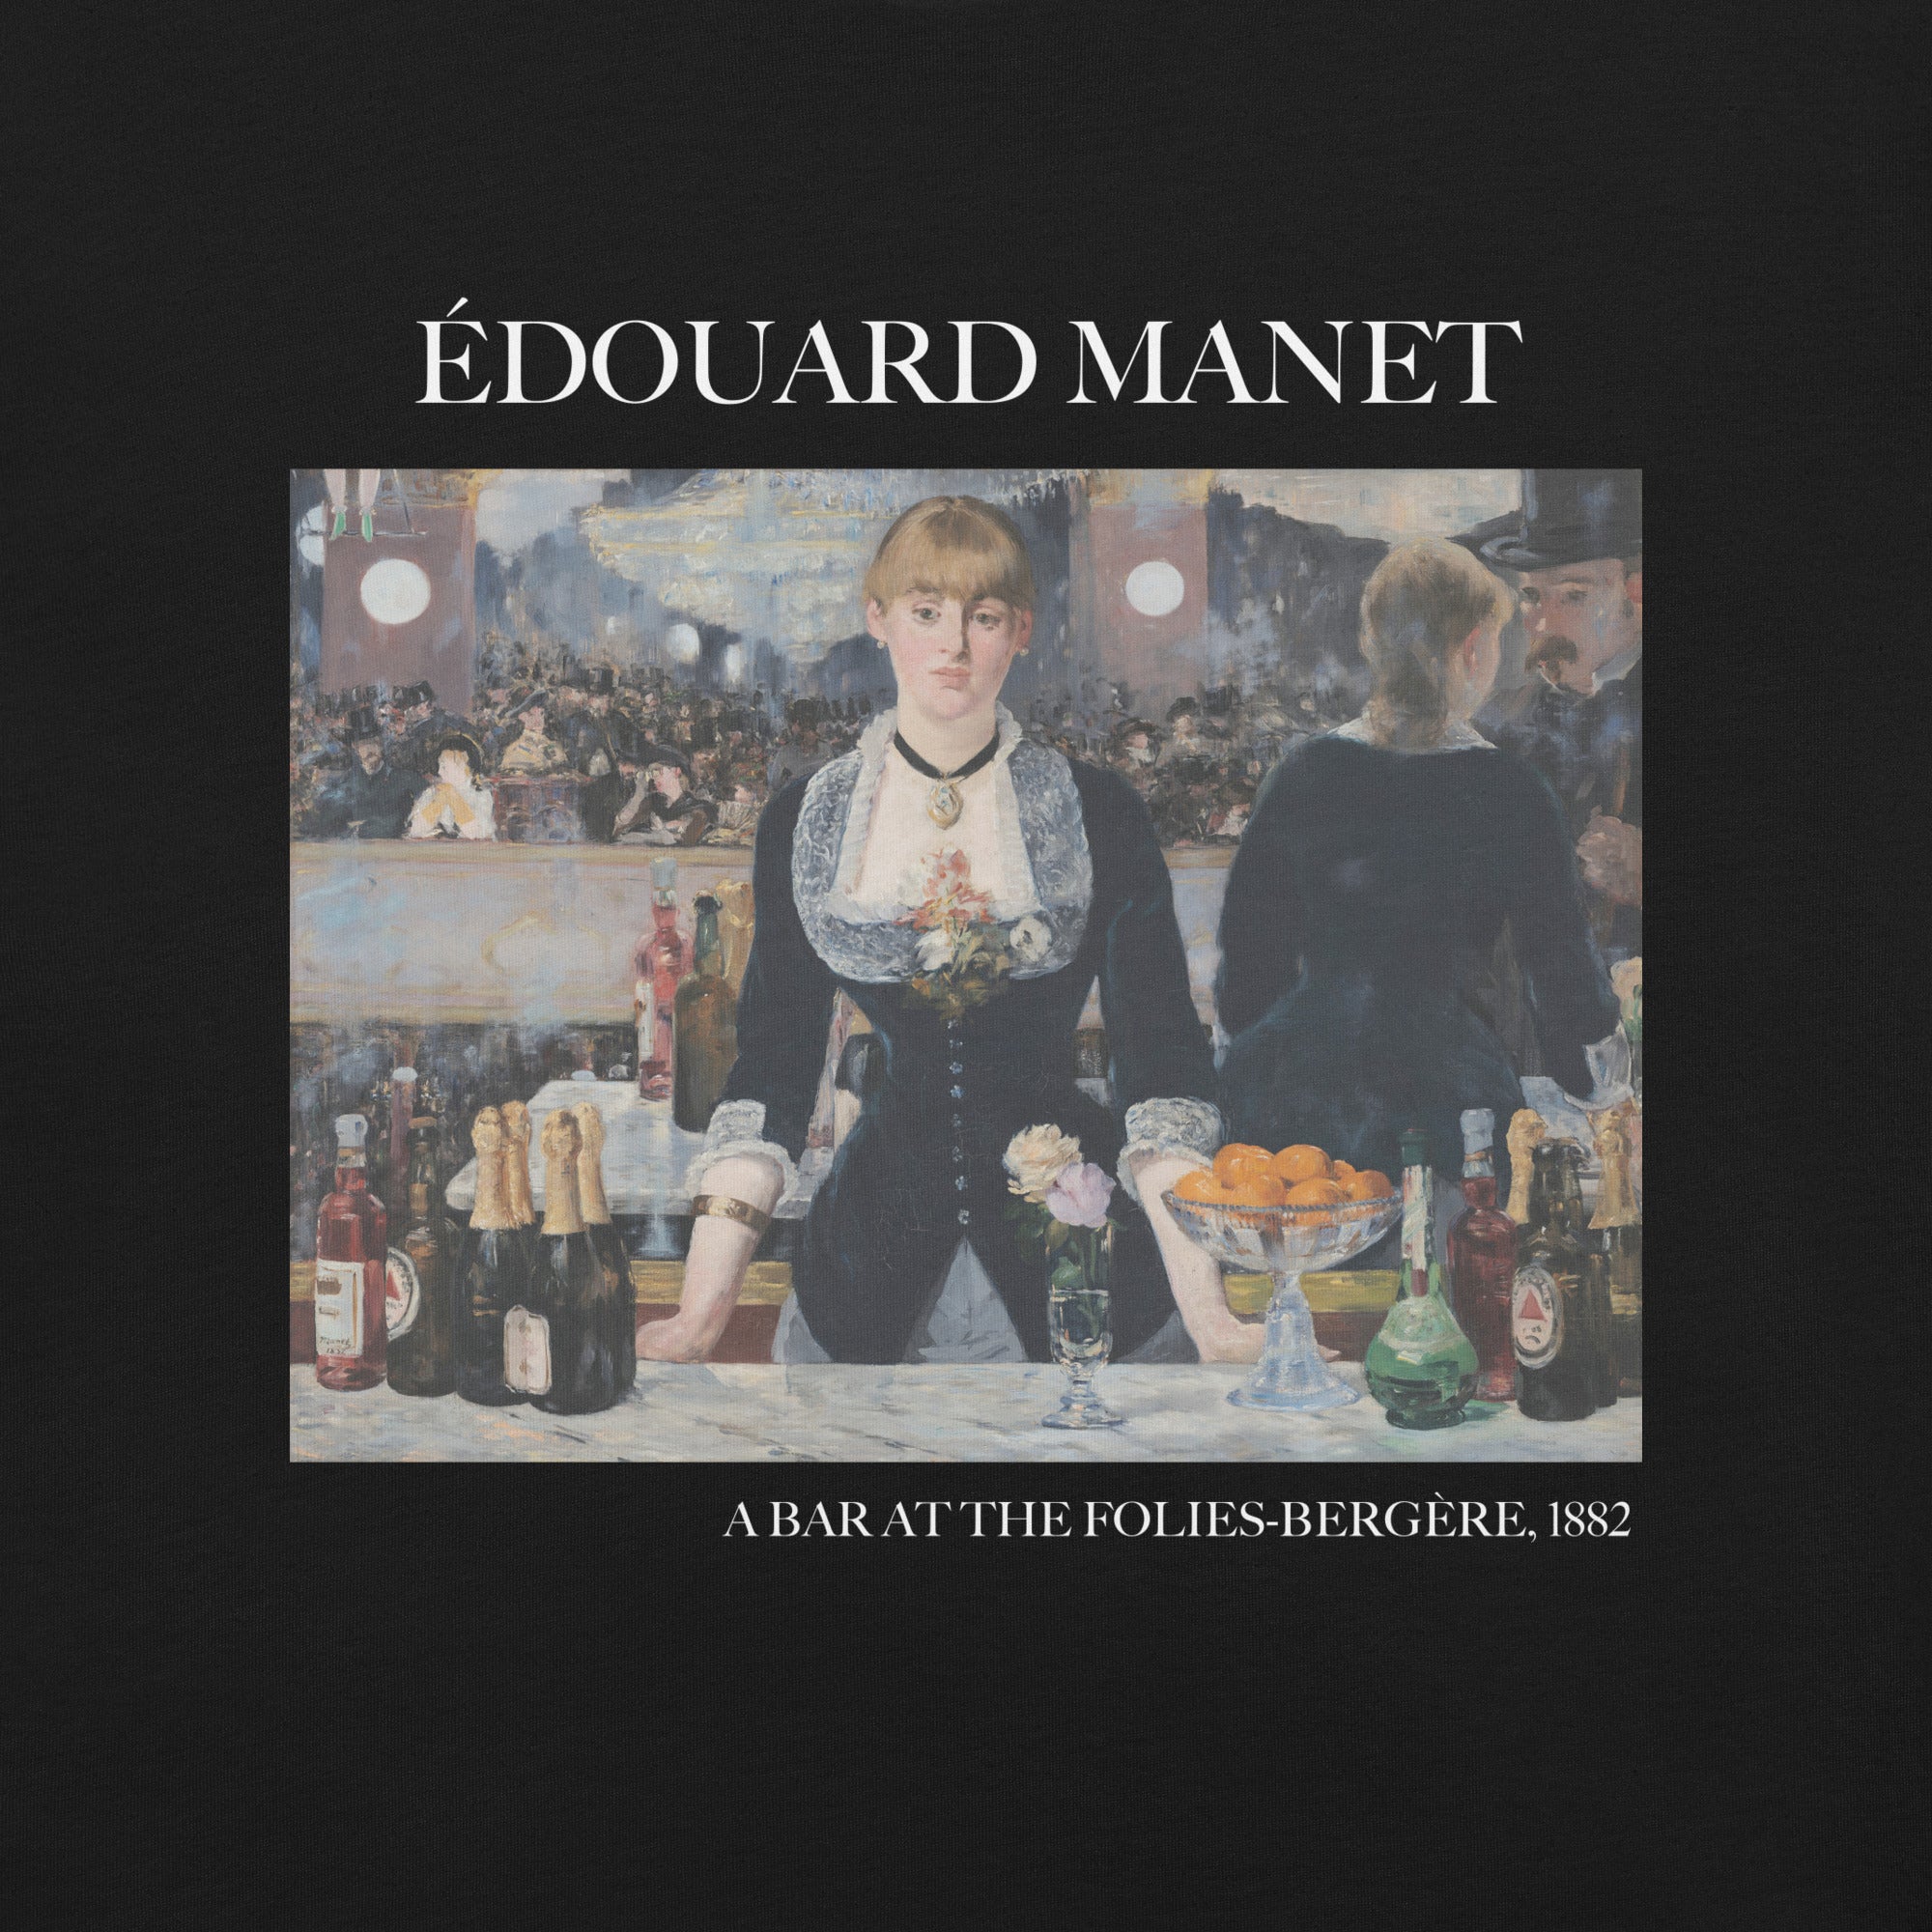 Édouard Manet 'A Bar at the Folies-Bergère' Famous Painting T-Shirt | Unisex Classic Art Tee